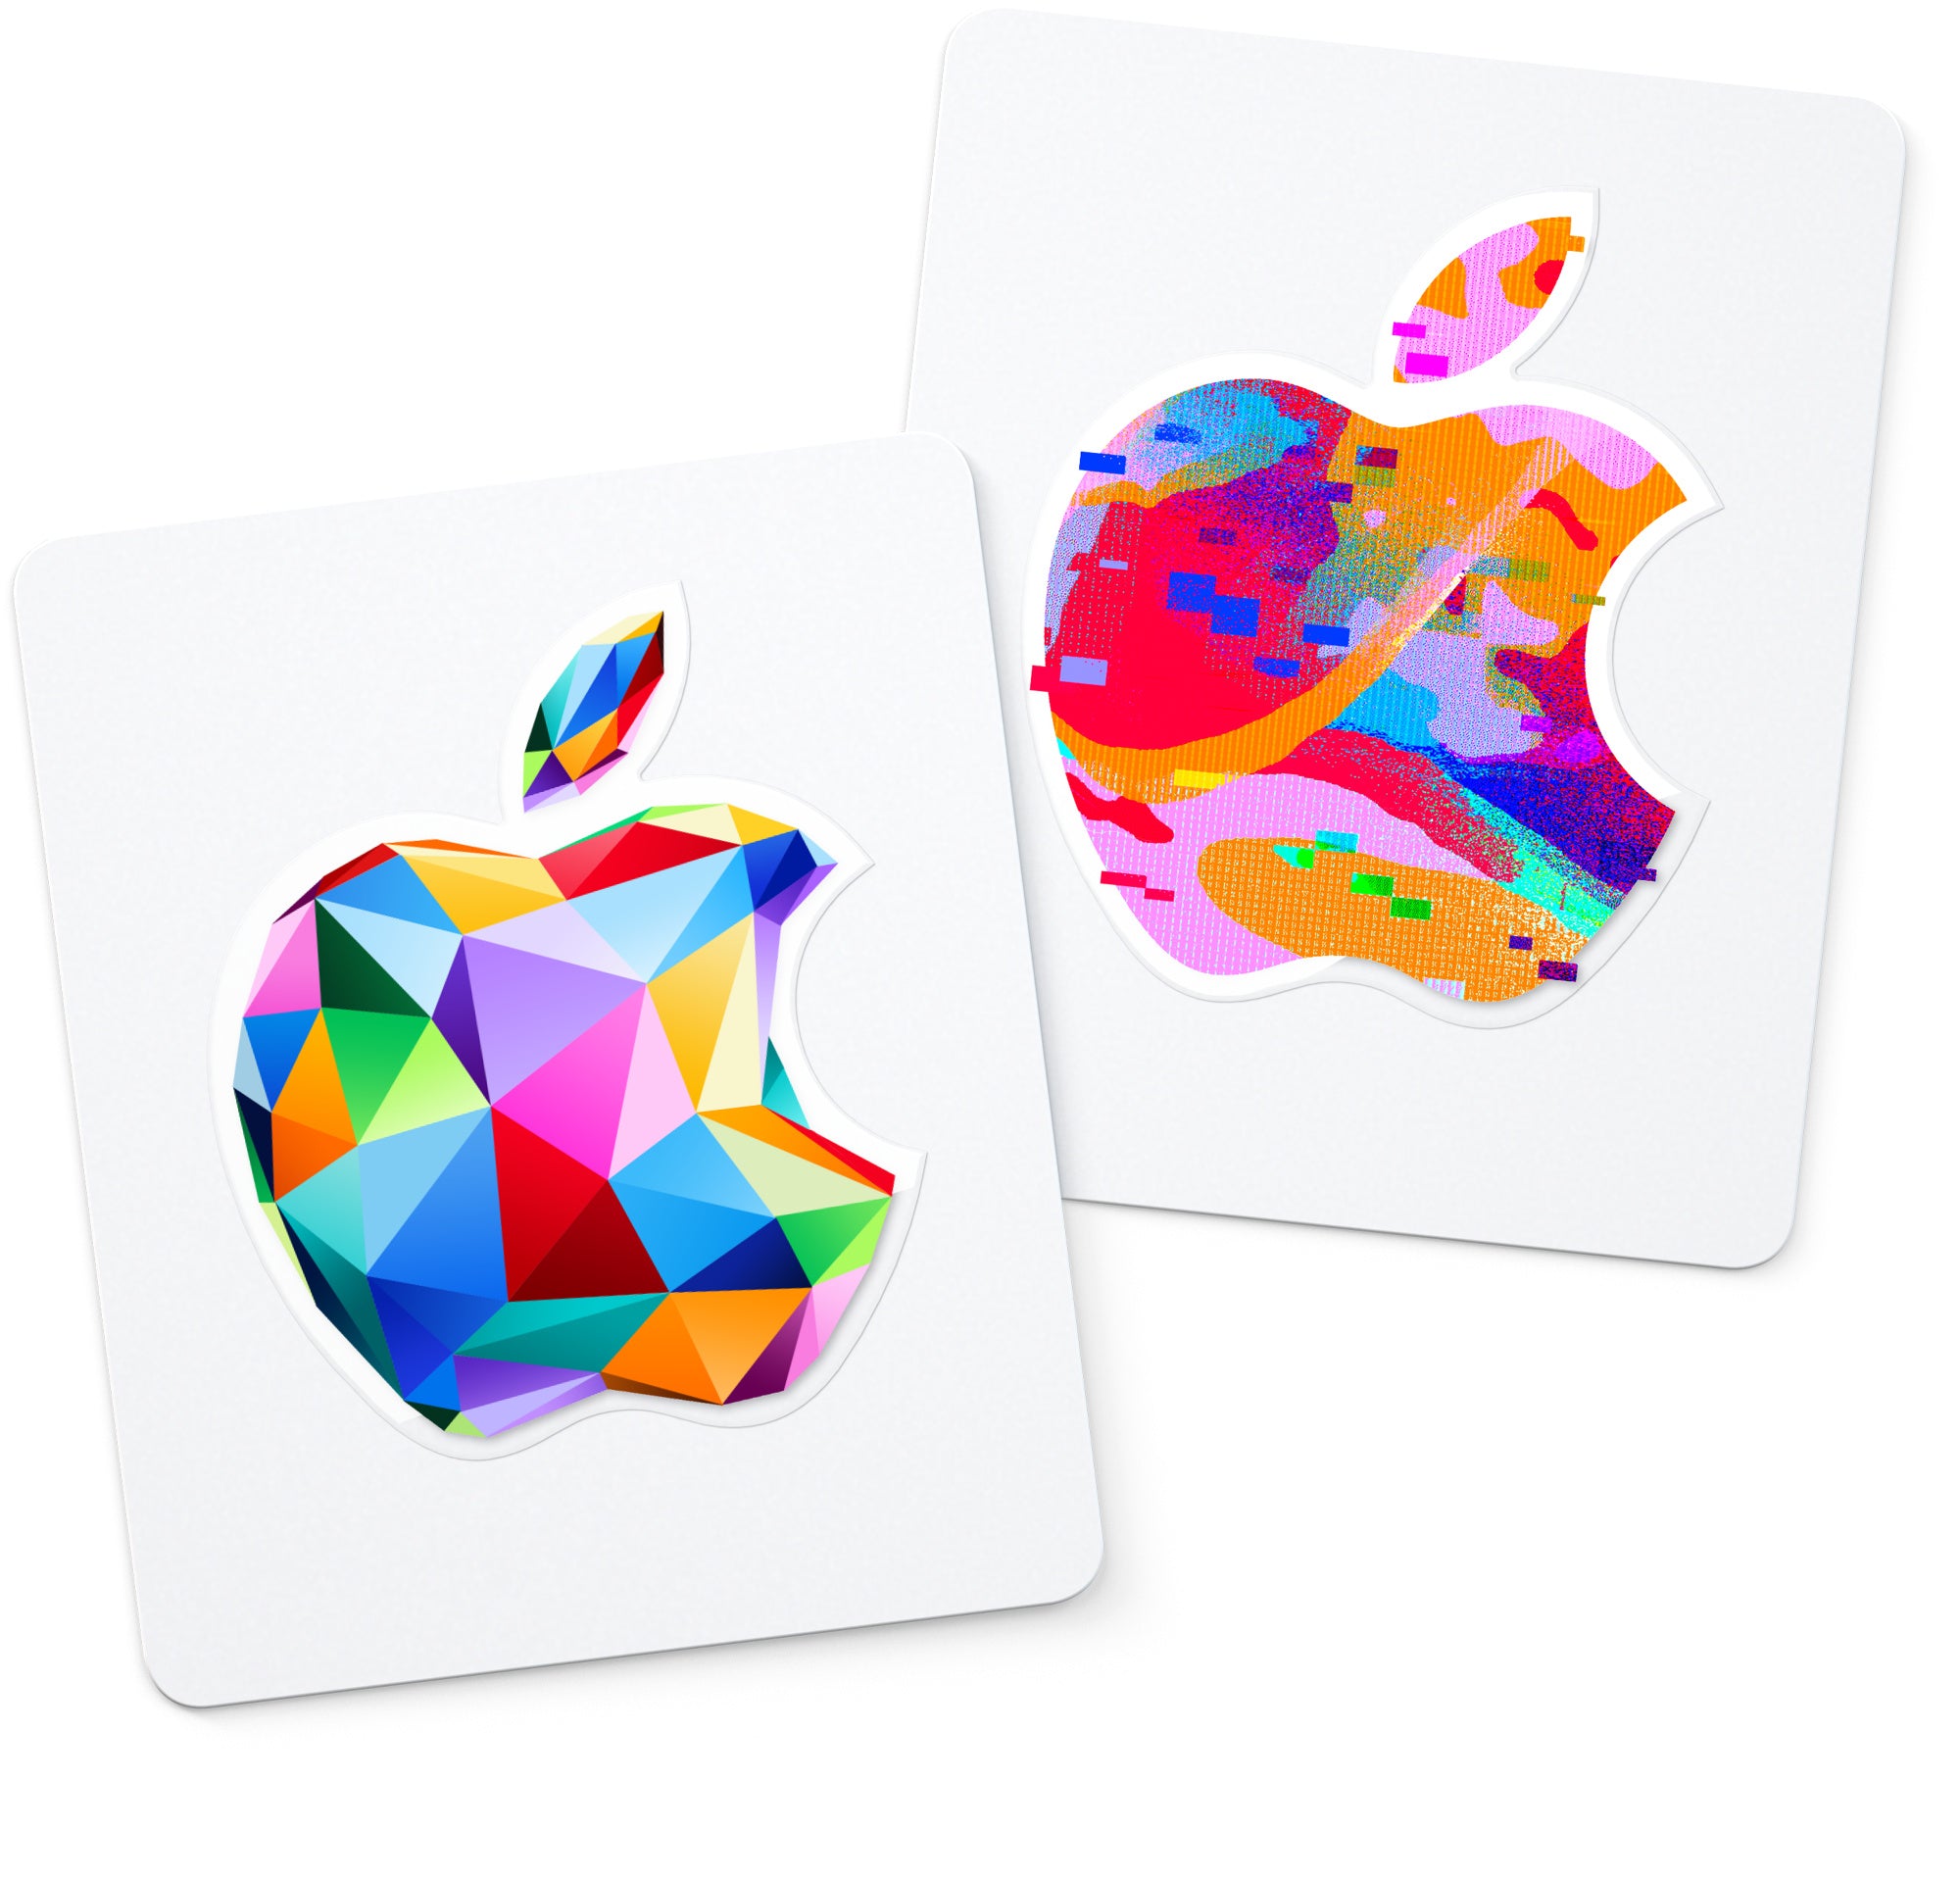 Apple $200 gift card